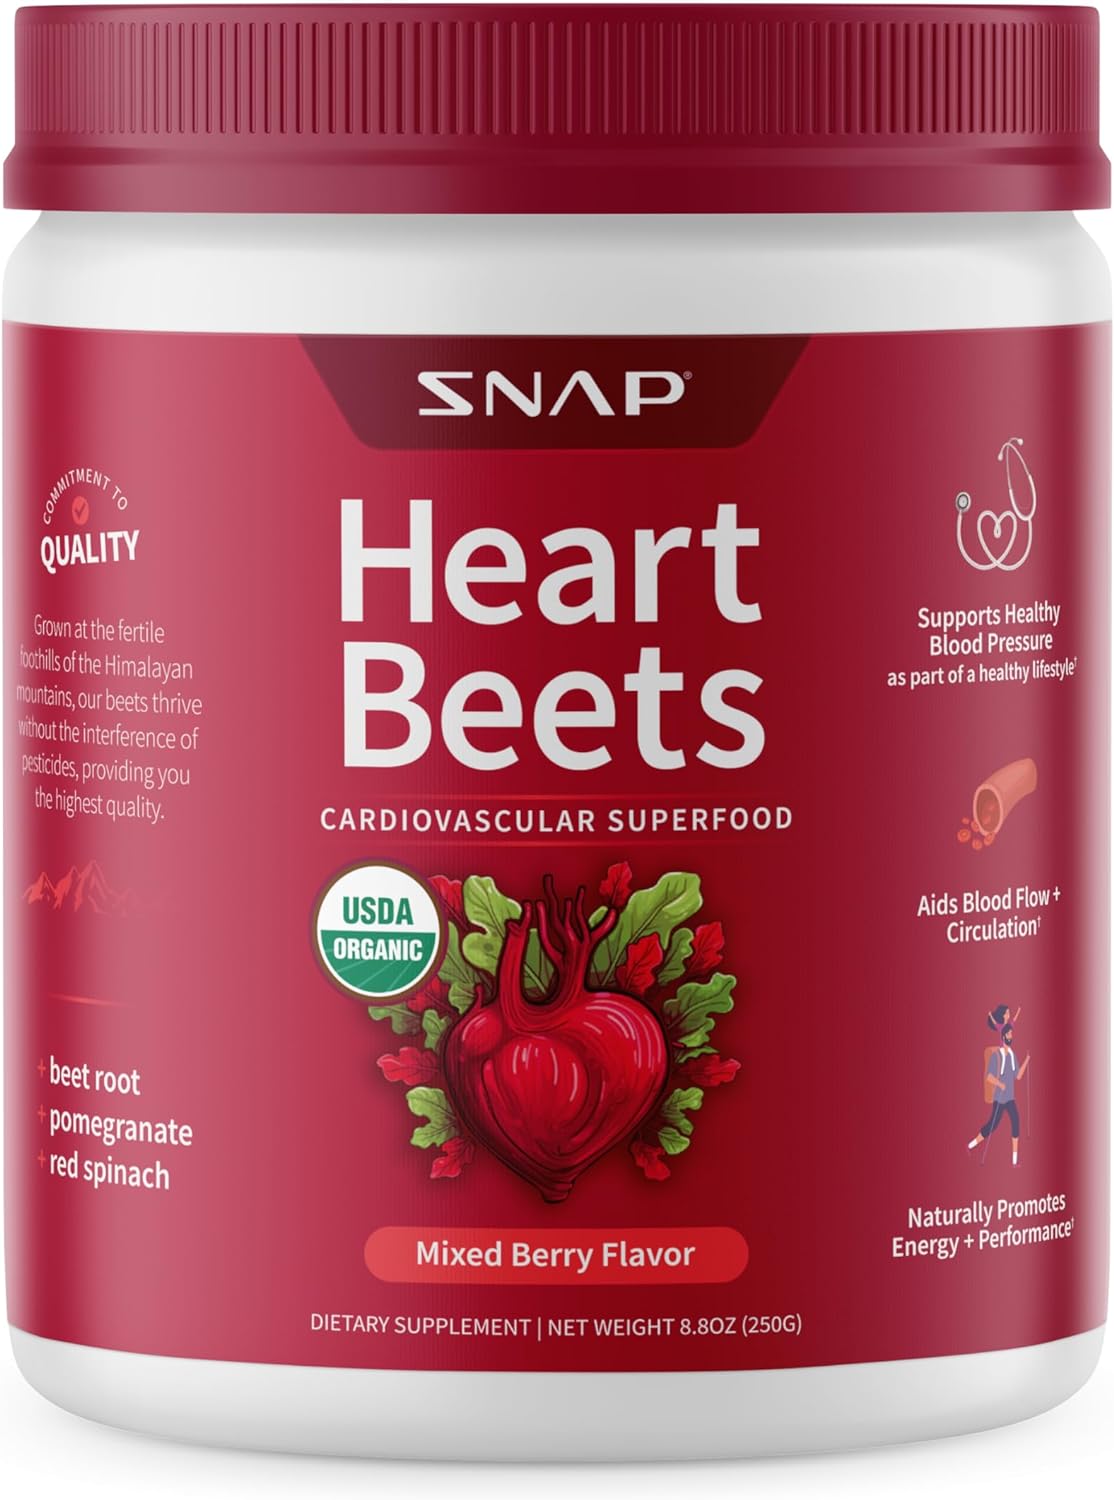 Heart Beets